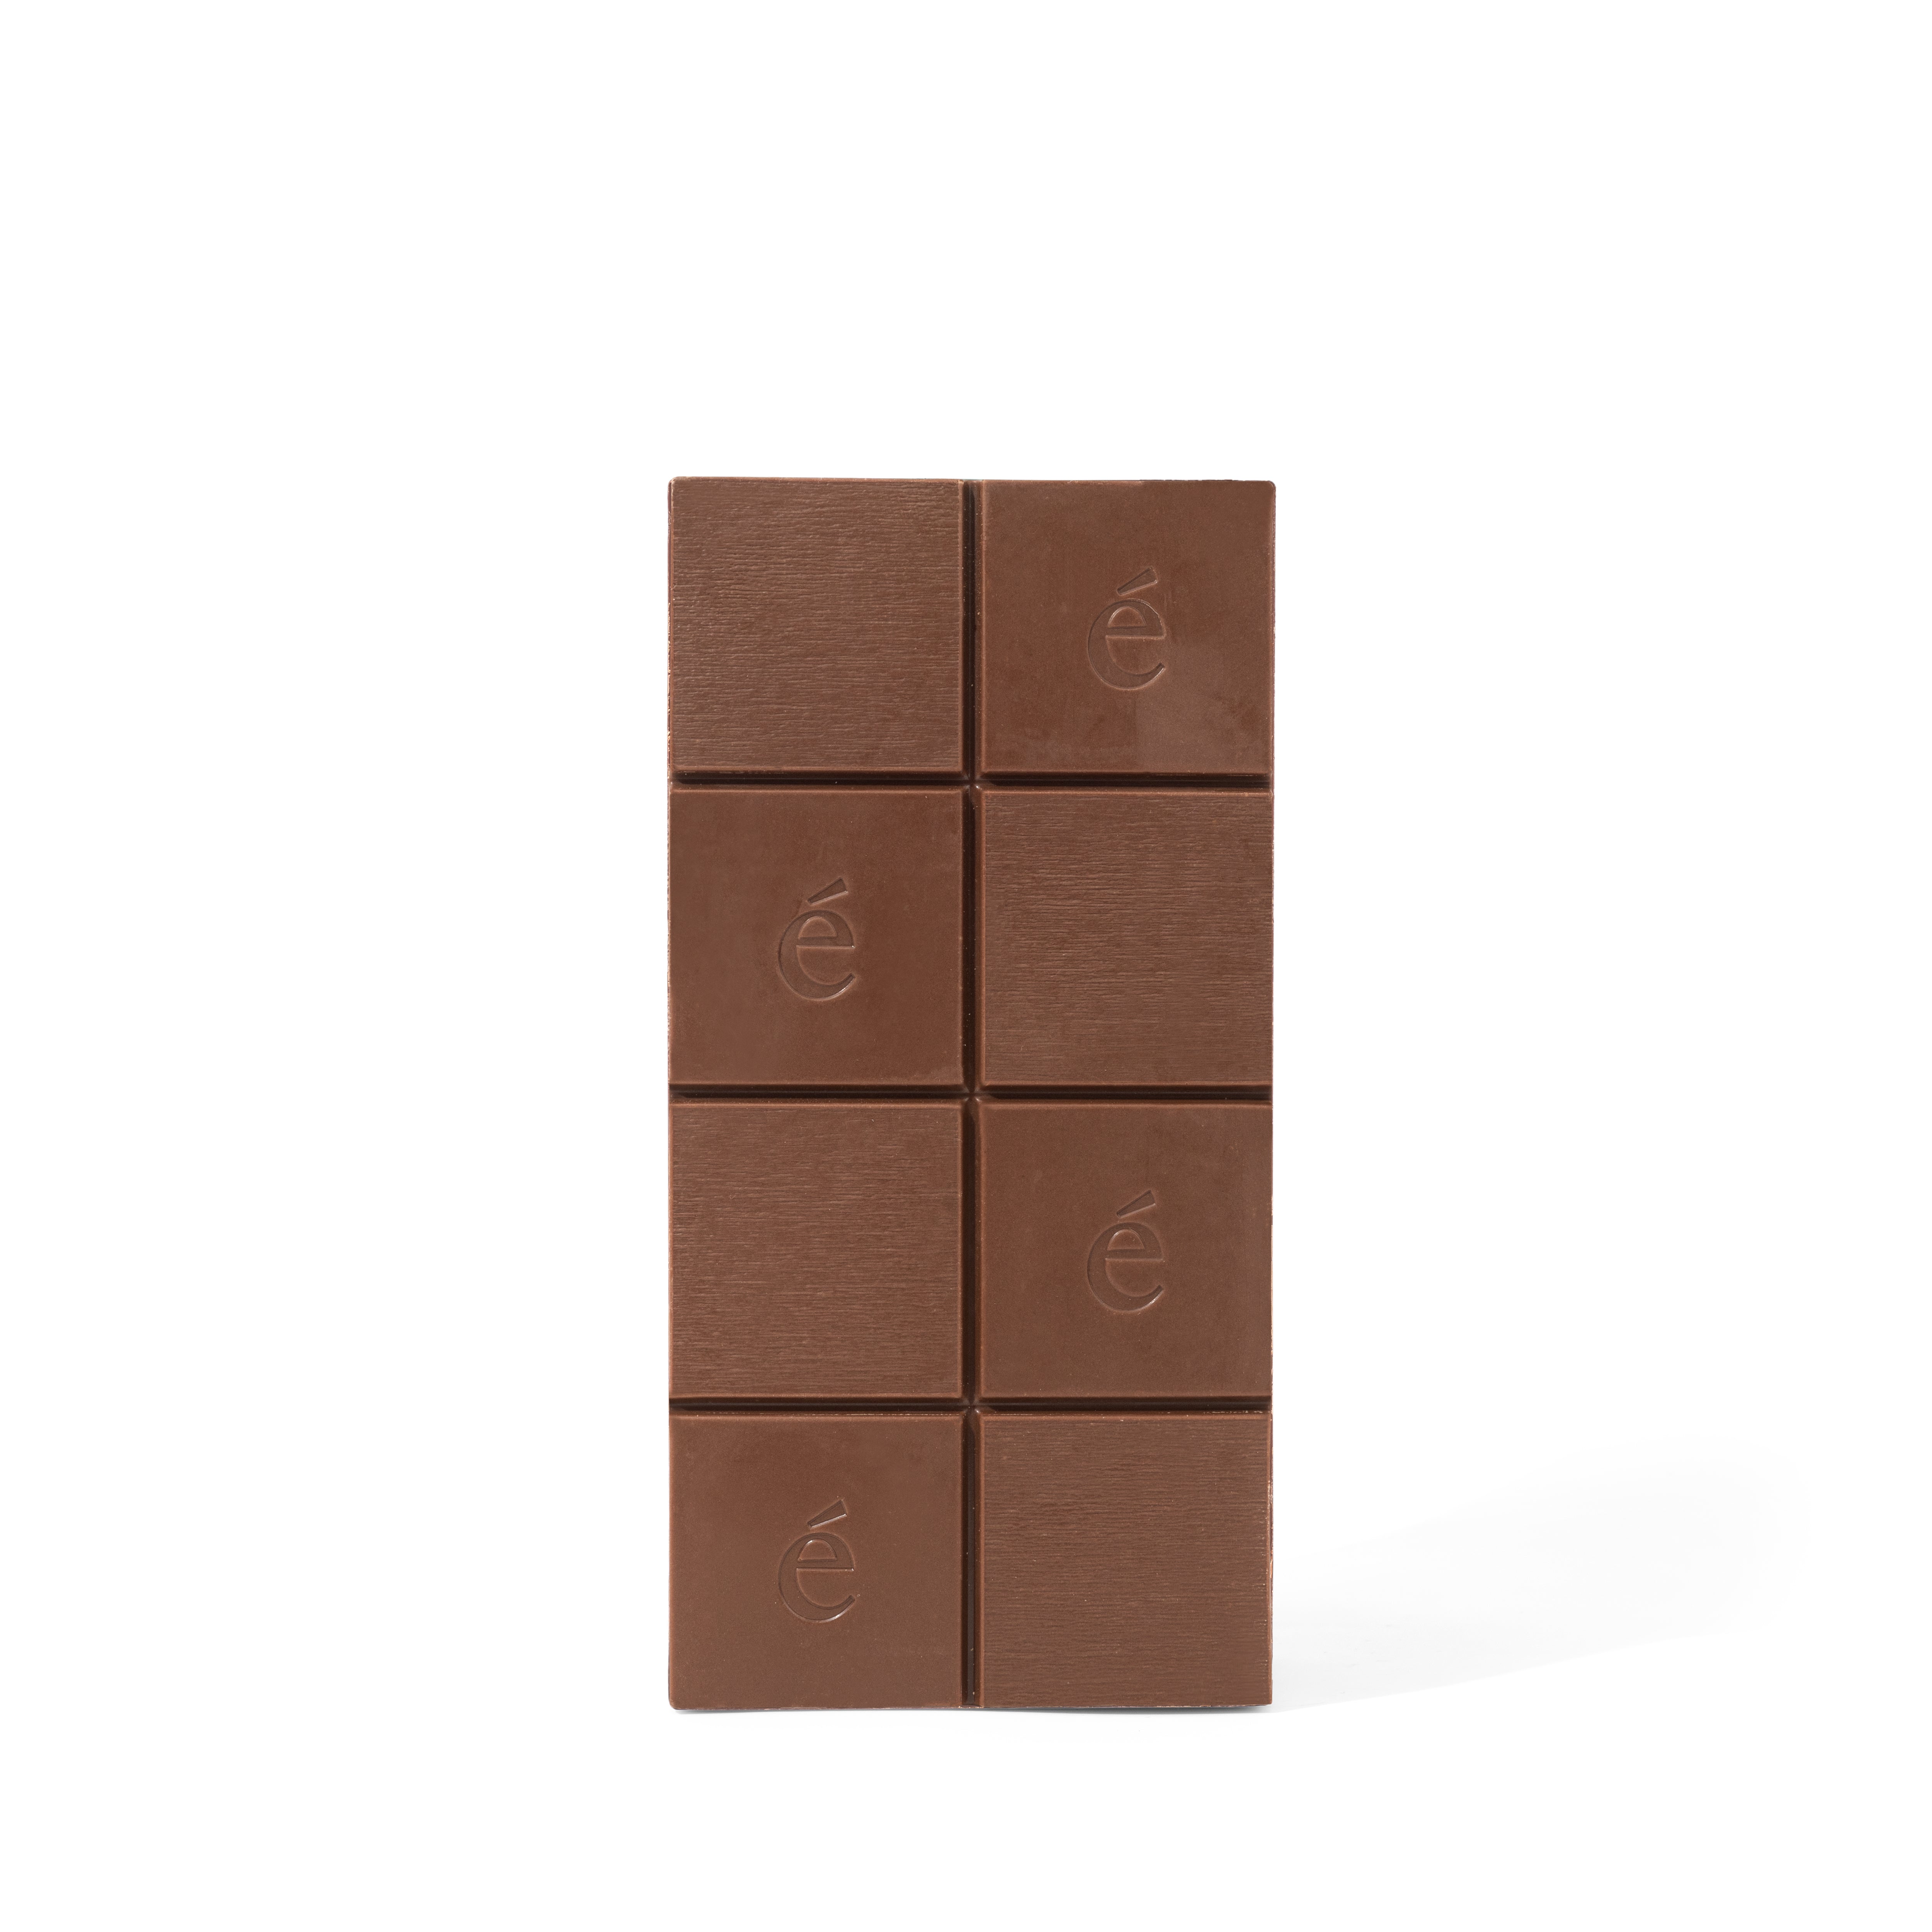 Entisi - Almond Praline Milk Chocolate Bar